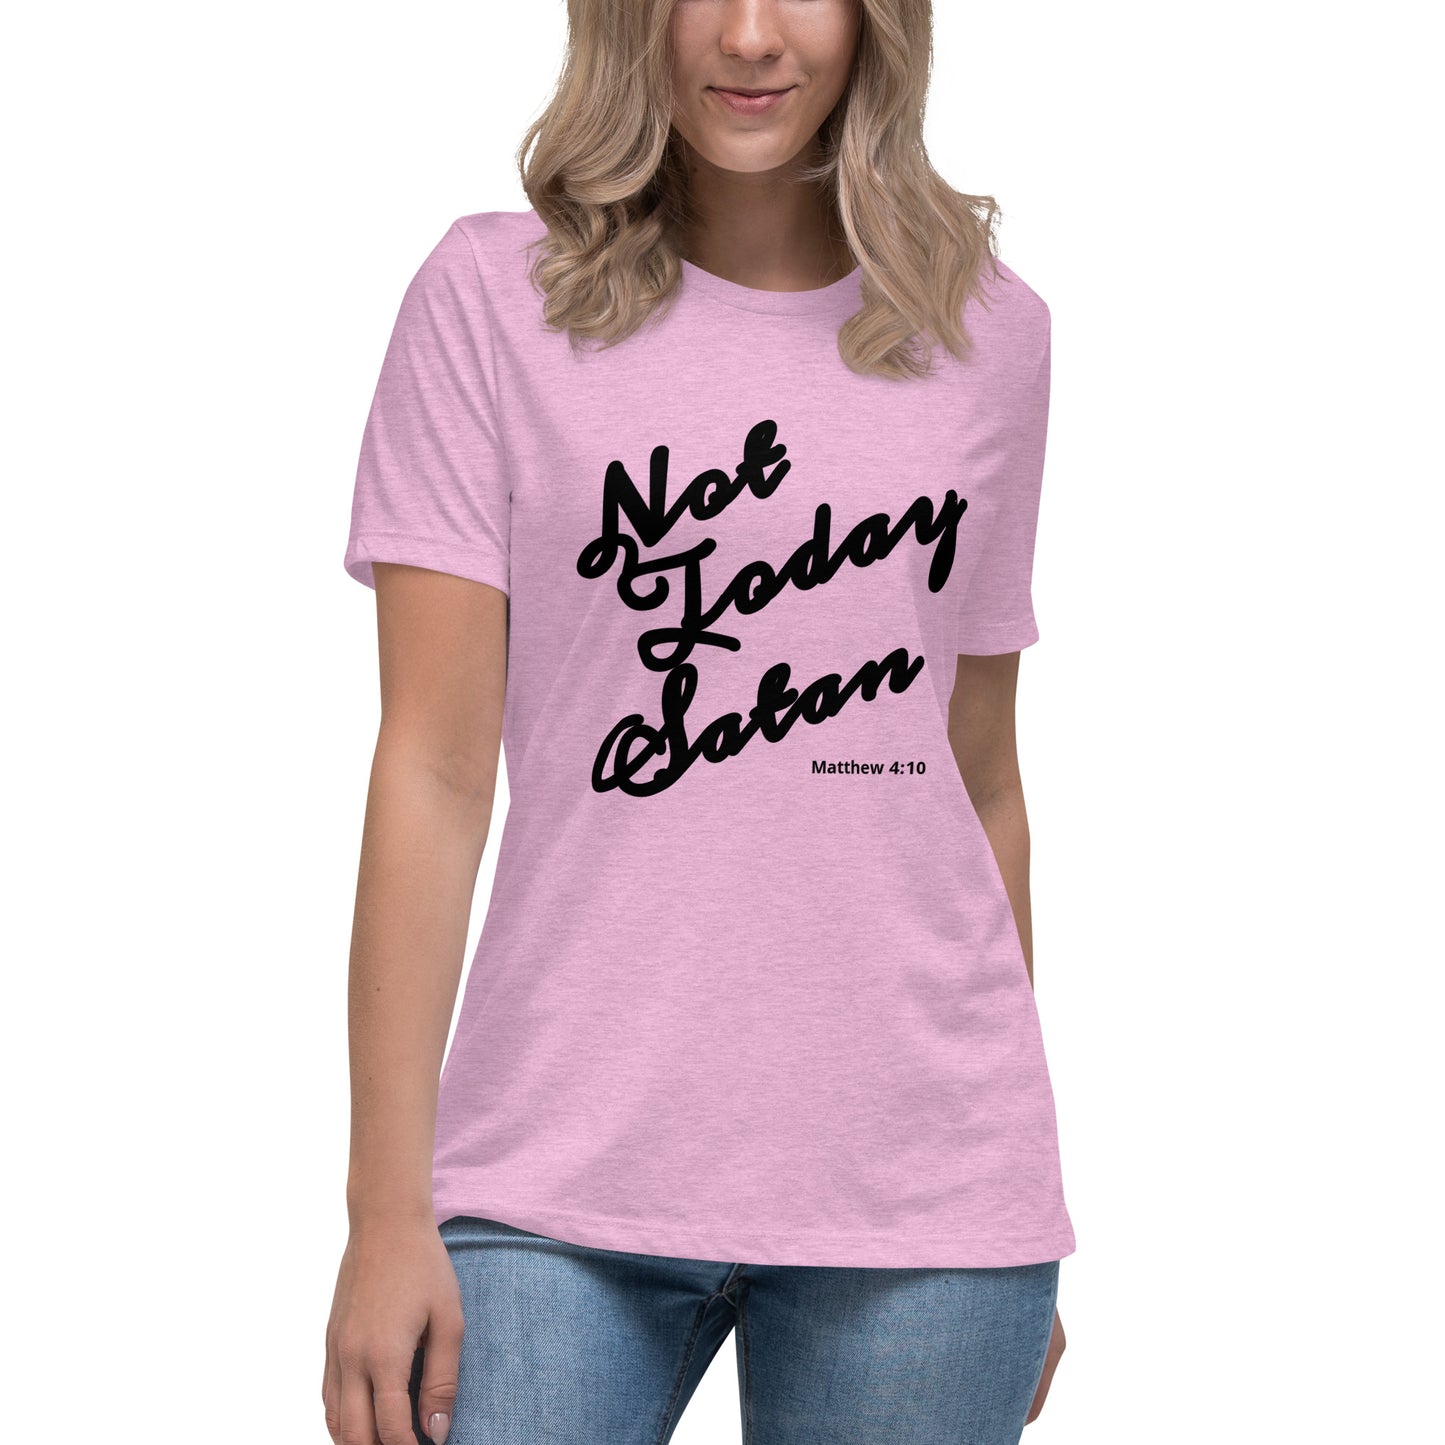 Pink christian tee shirt